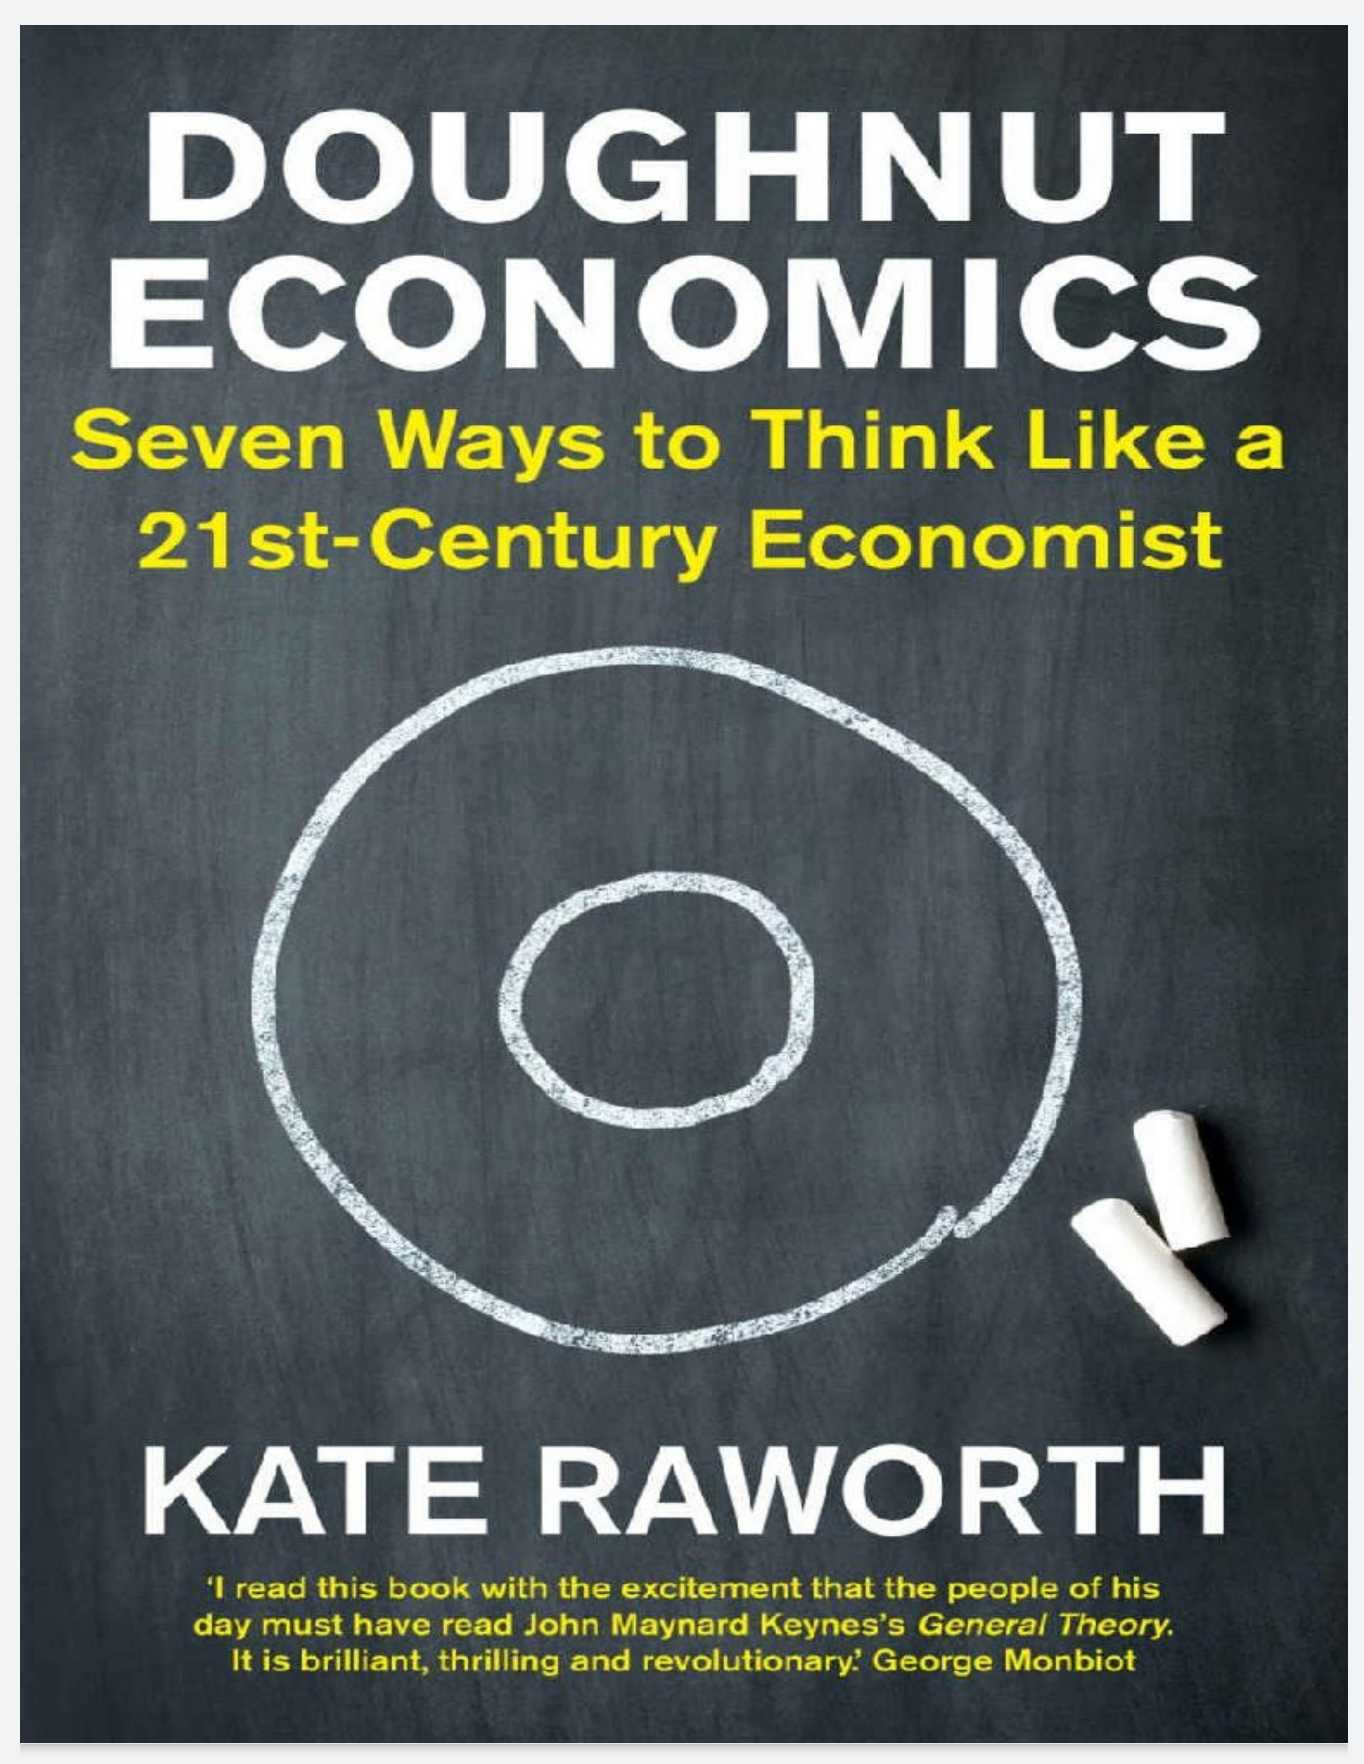 PDF Book: Doughnut Economics: Seven Ways to Think Like a 21st-Century Economist by Kate Raworth